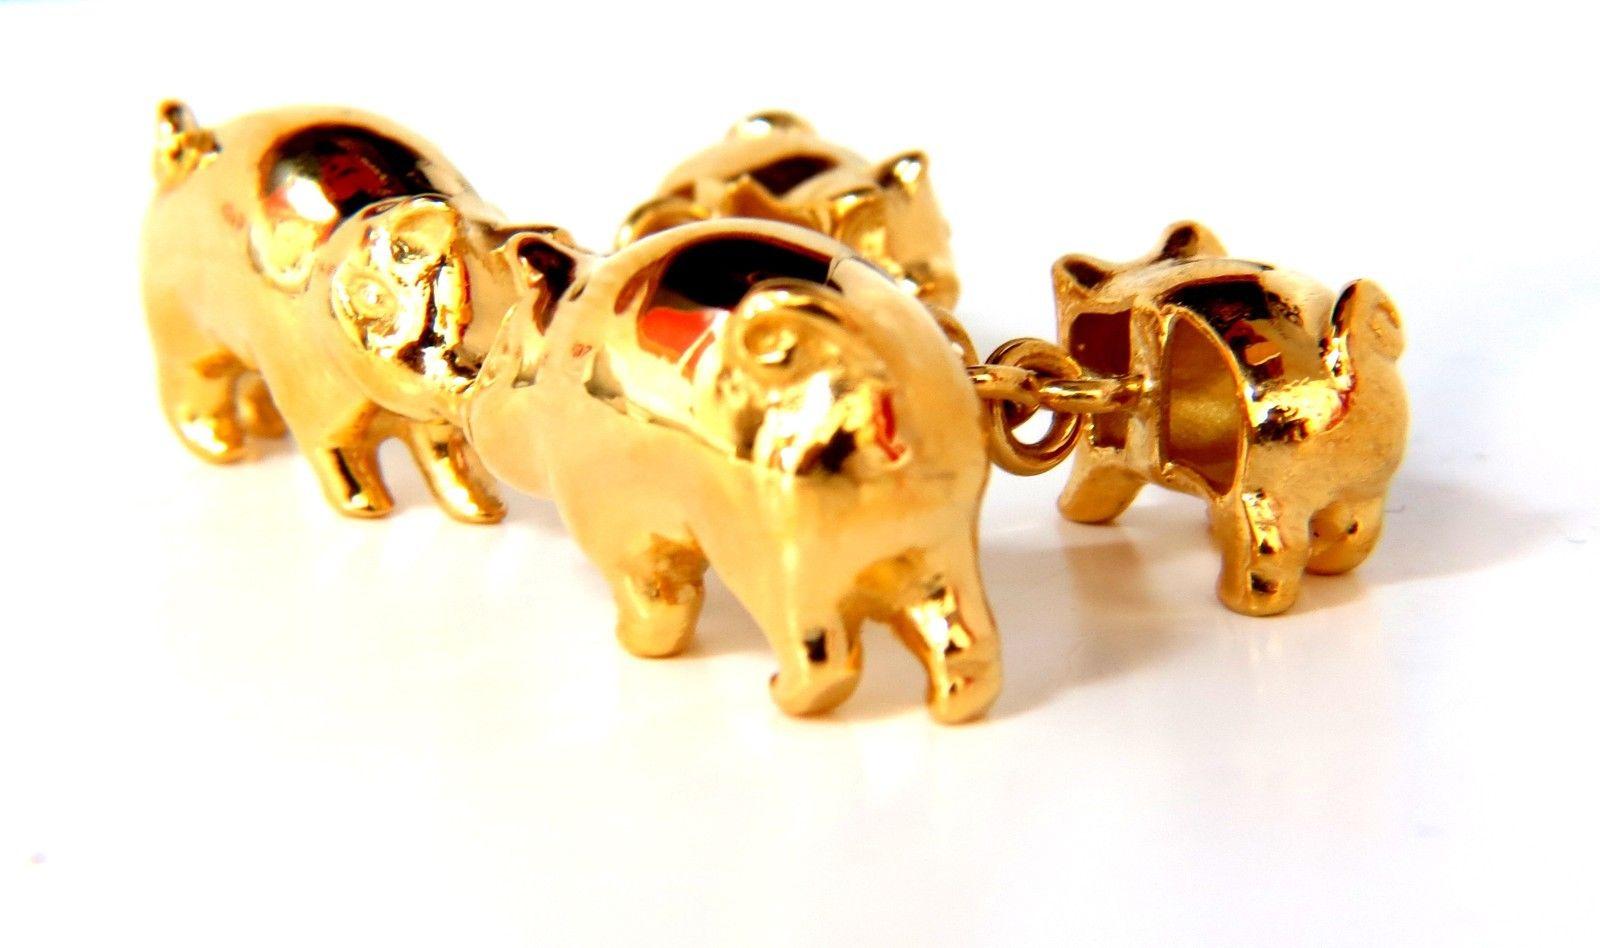 22 Karat Rare 3D Boar Pig Cufflinks or High Shine and Amazing Details 2